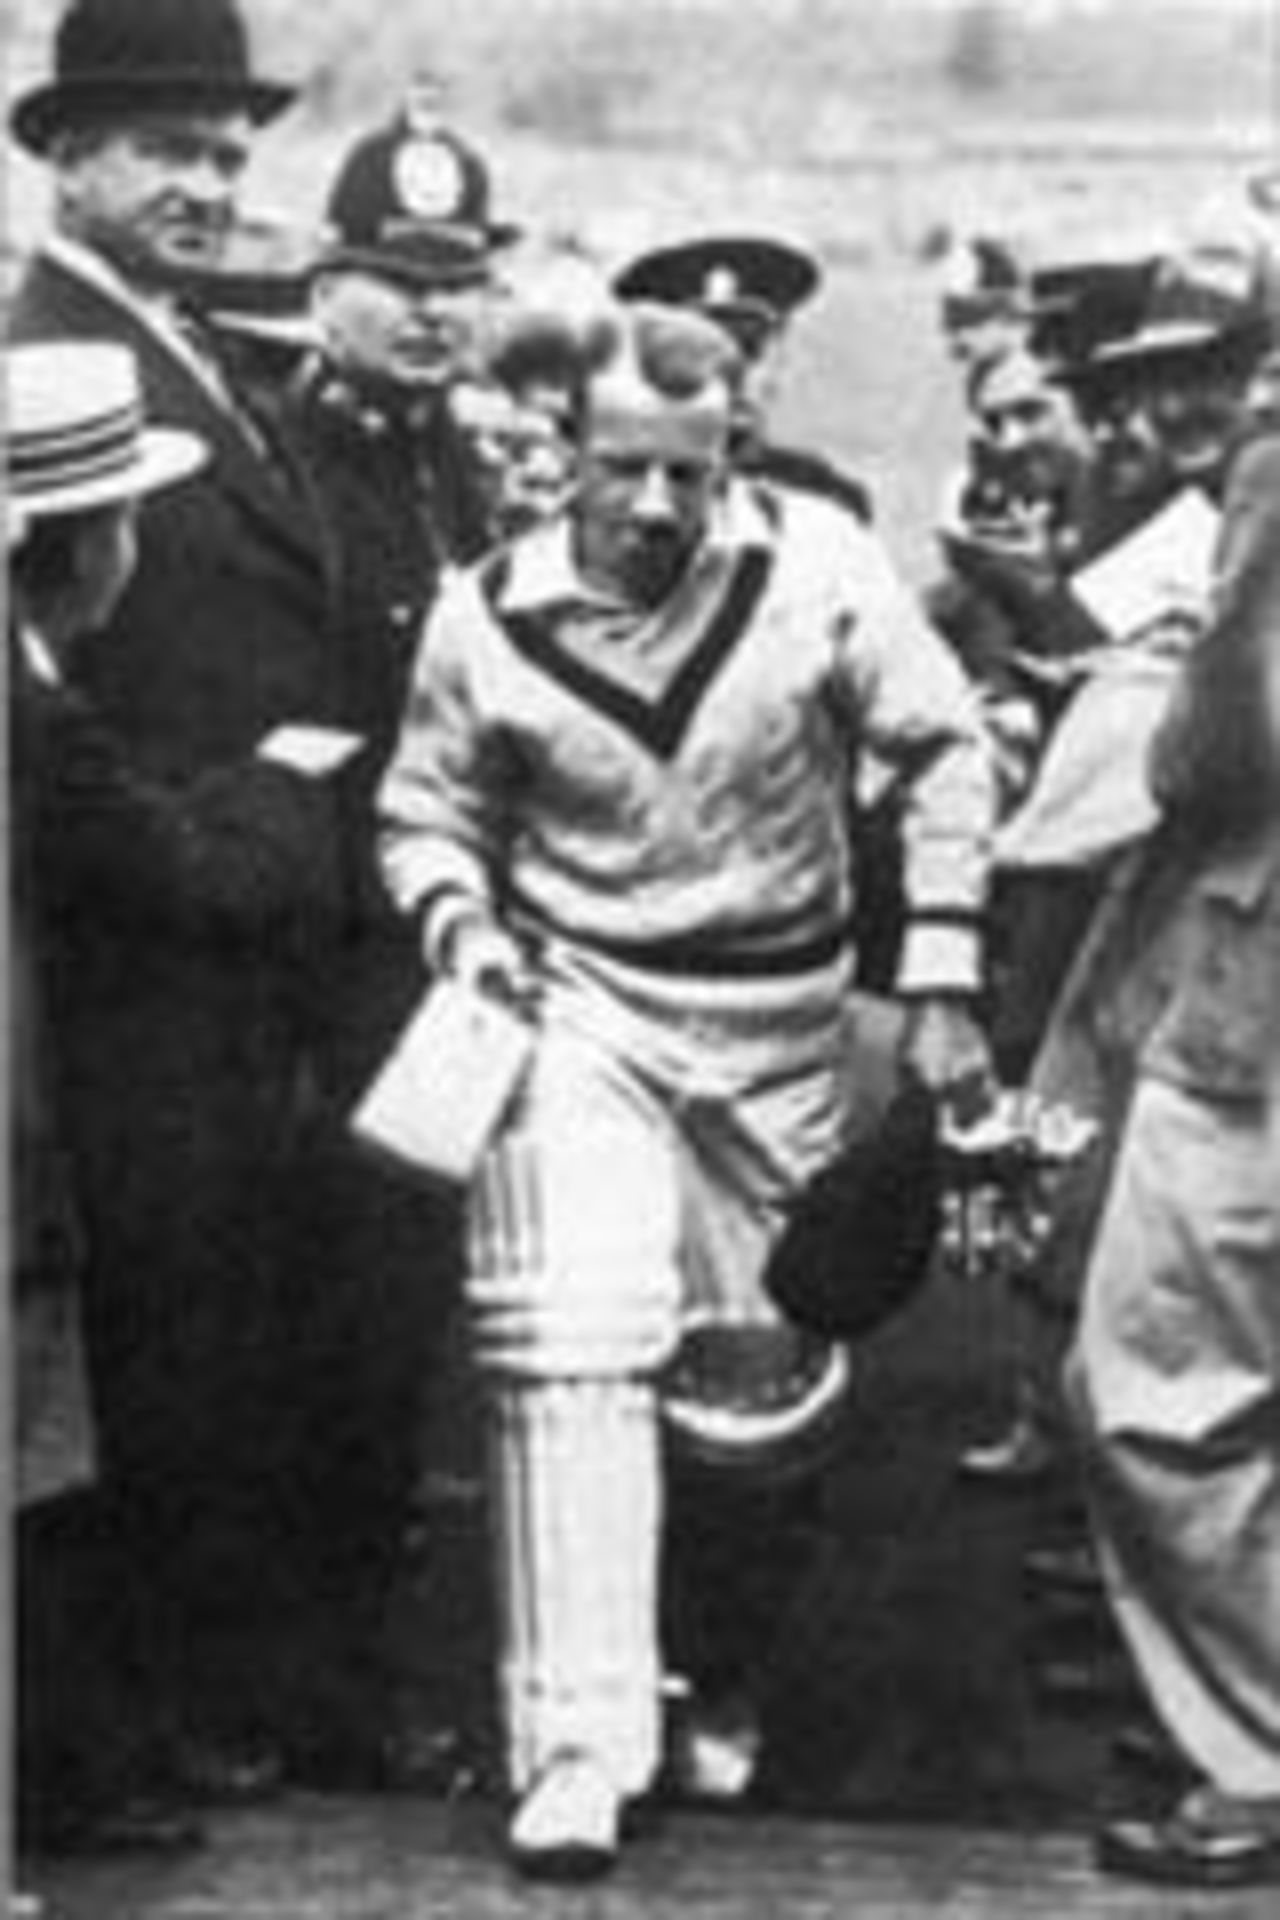 Don Bradman walks through the crowd after scoring a triple century, England v Australia, Leeds, 1930